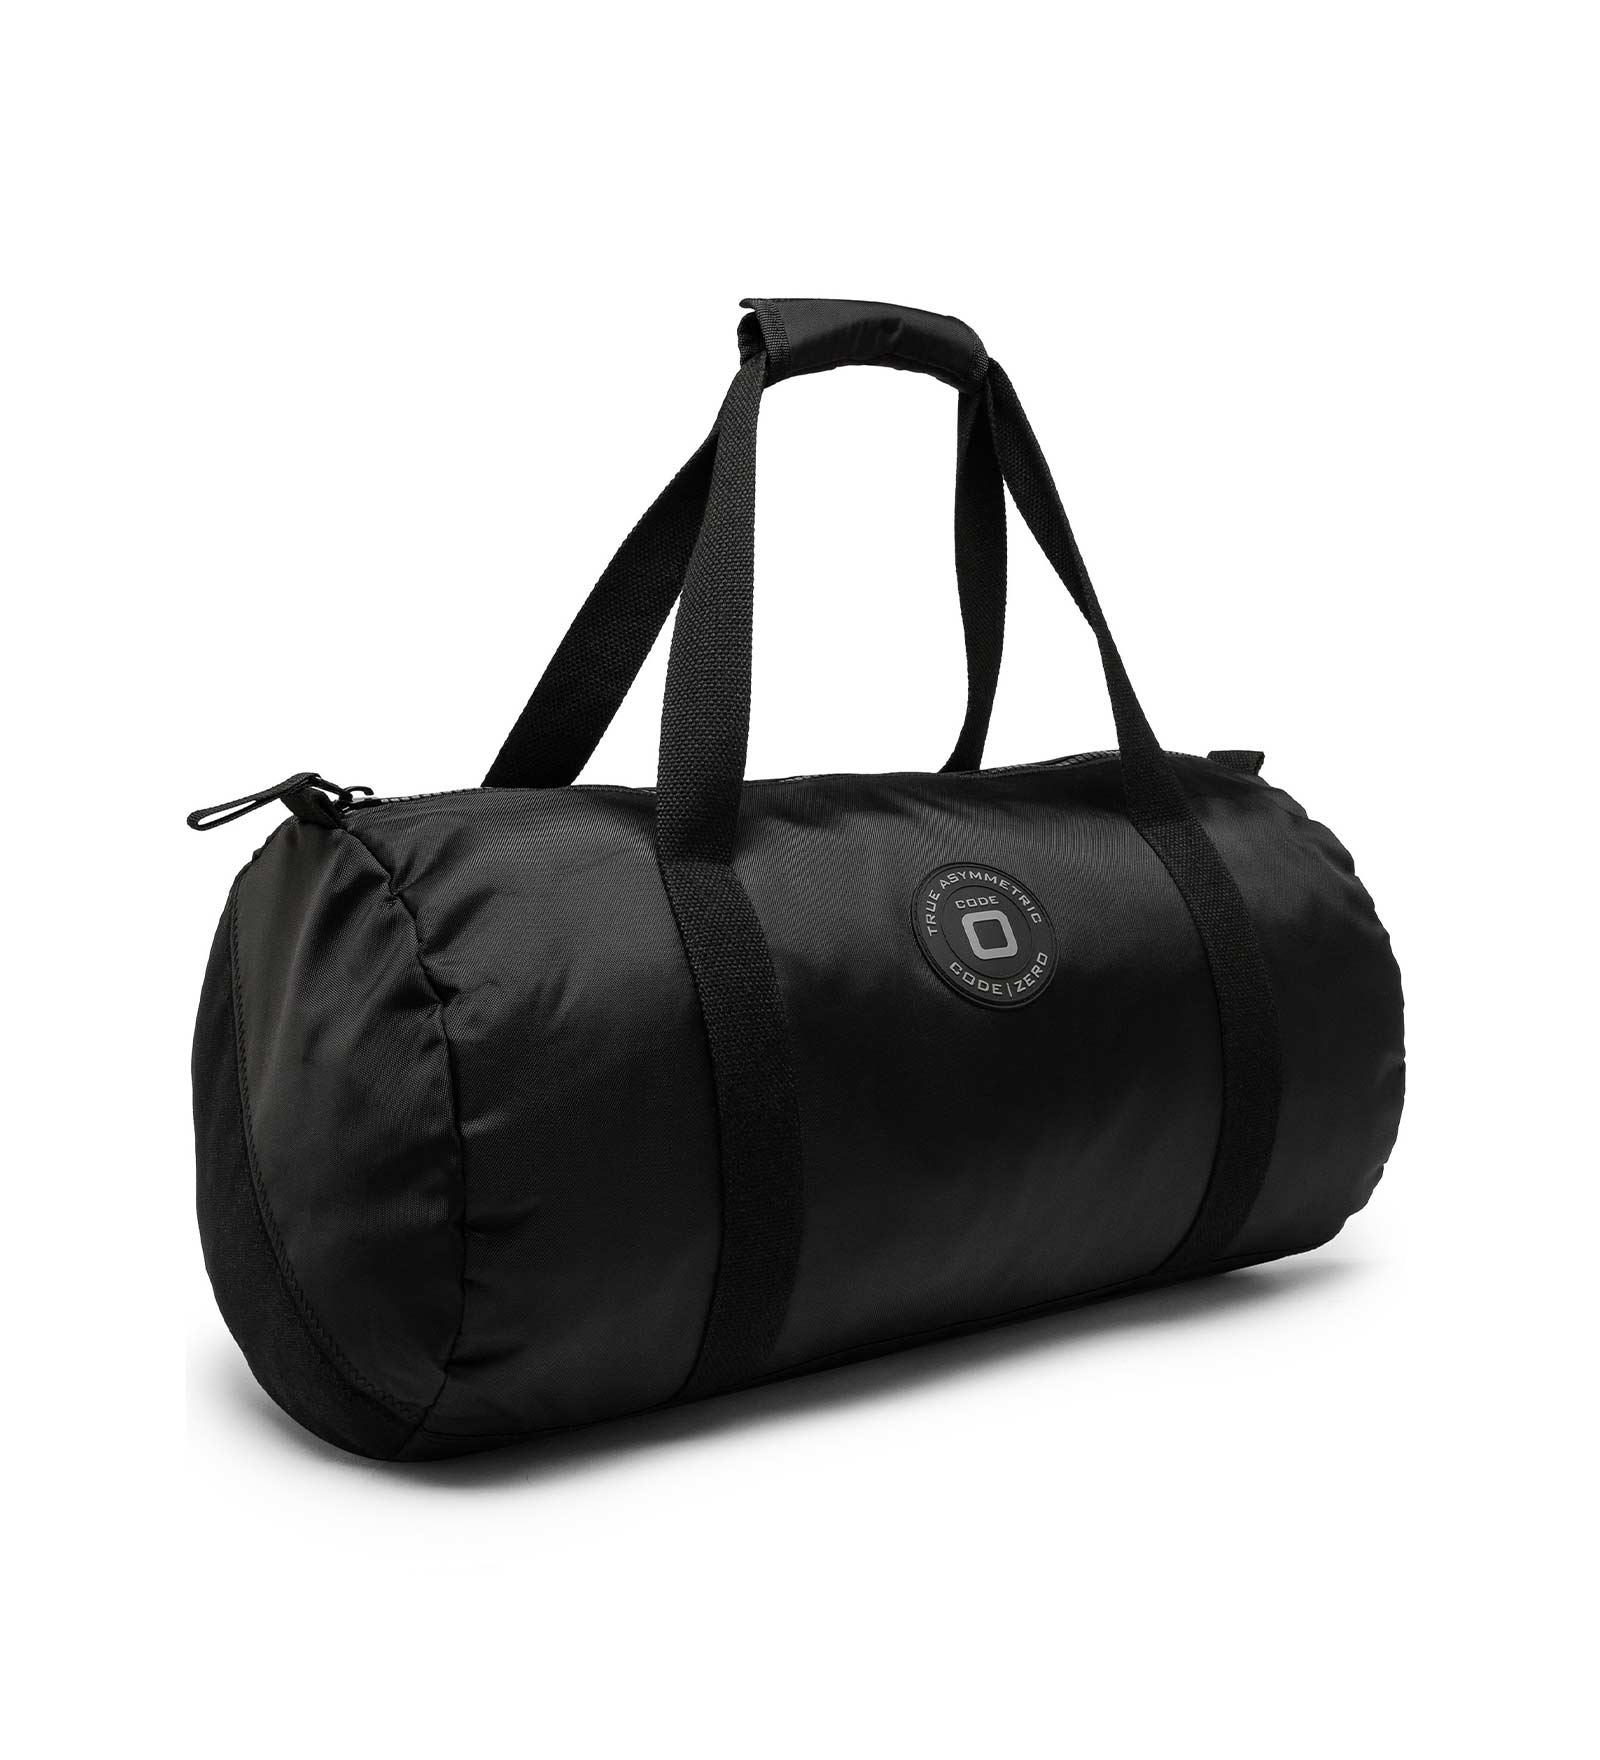 Buy Black & White Handbags for Women by Wknd Online